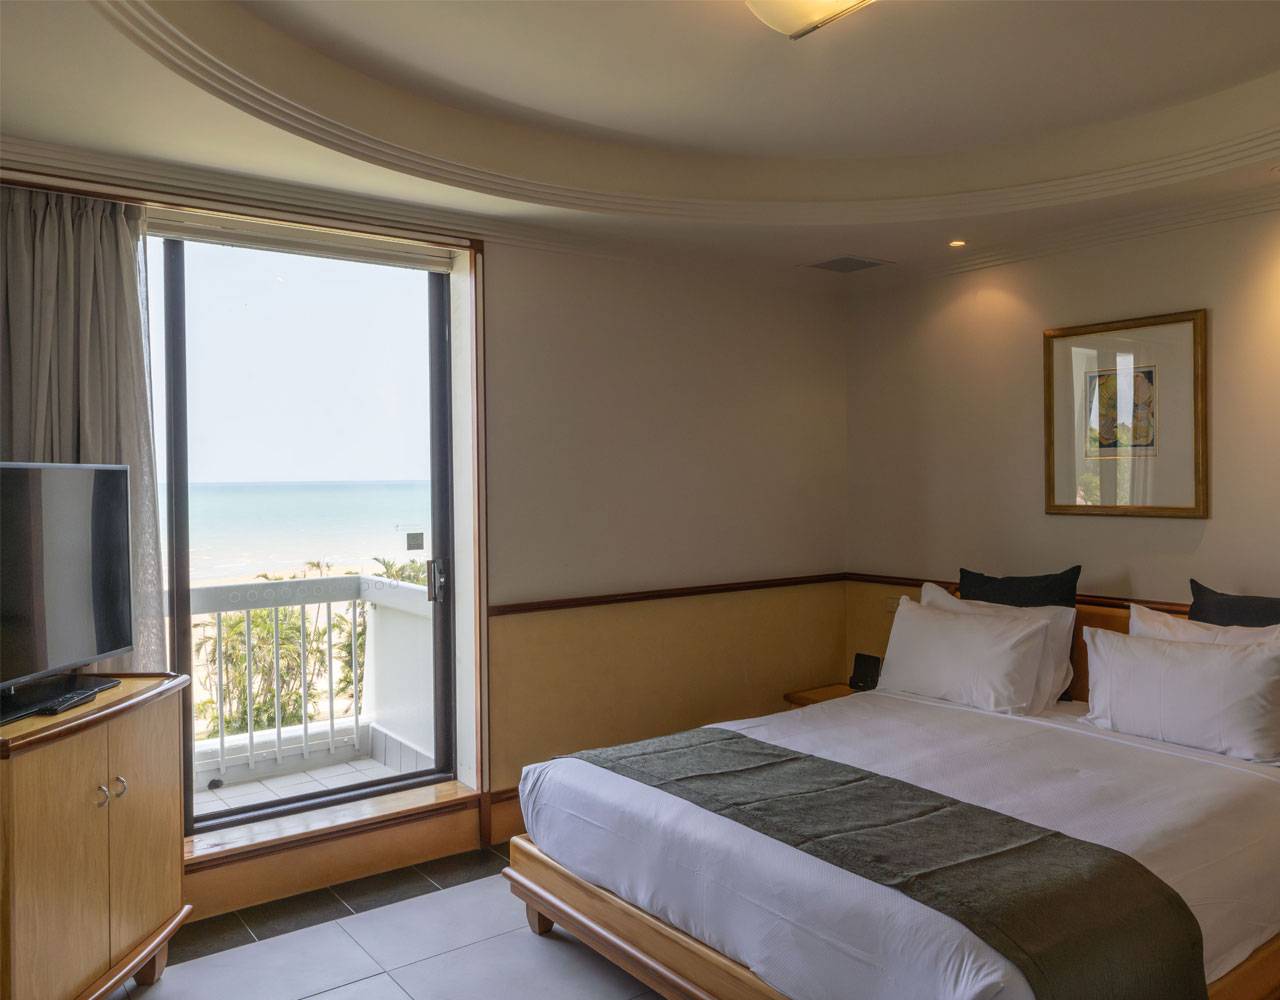 One Bedroom Suite with one king bed | Oceanview rooms | Darwin, Australia